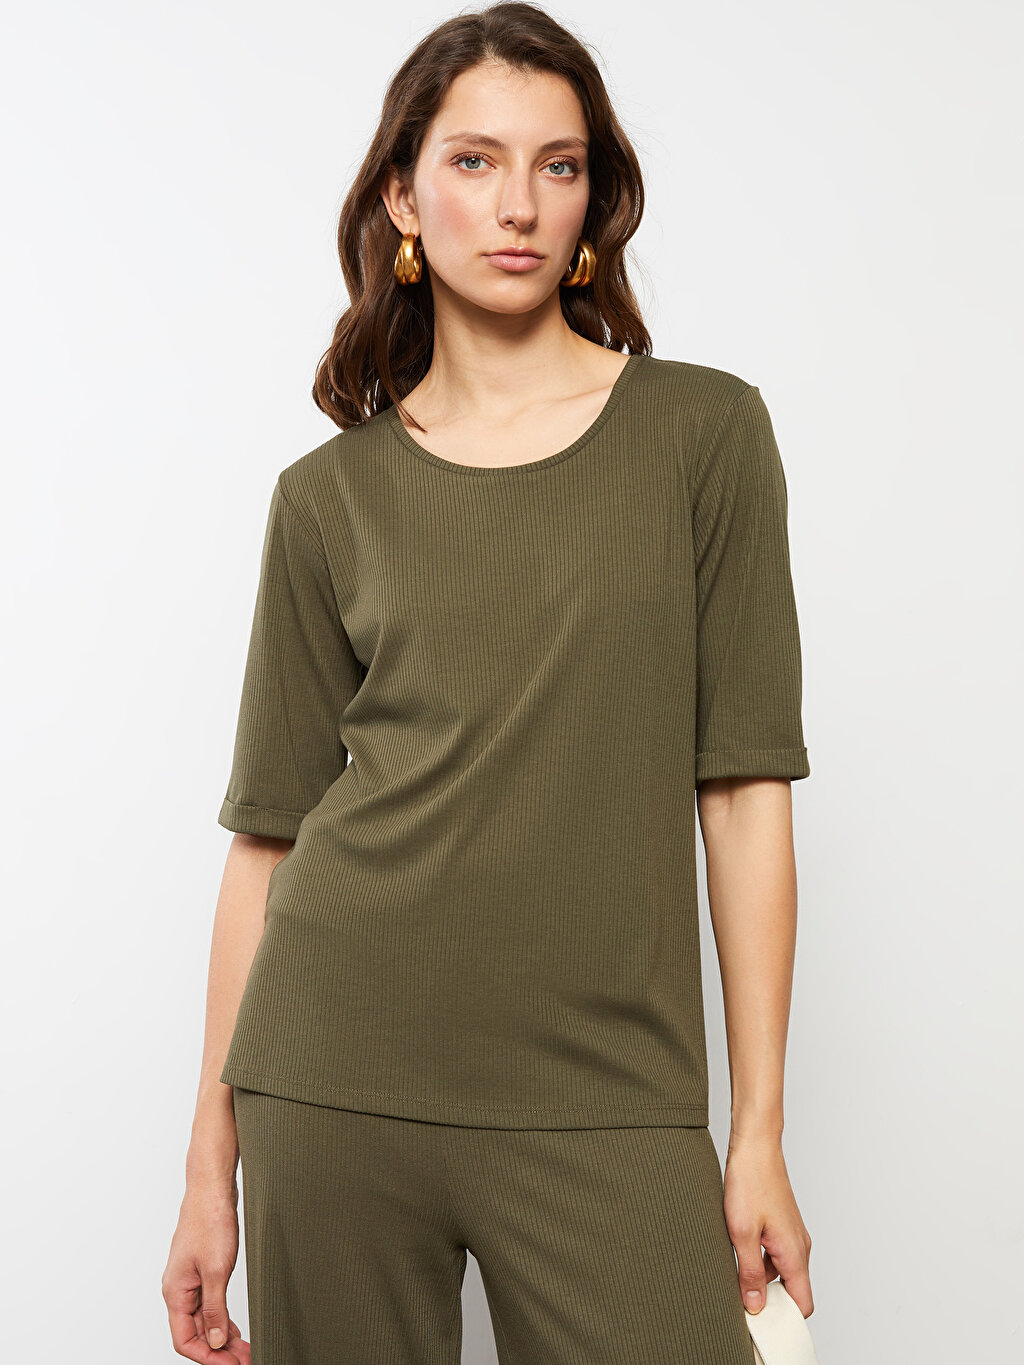 Short sleeve blouse women  Designer women's top with 3 vegetable dyed cotton fabrics